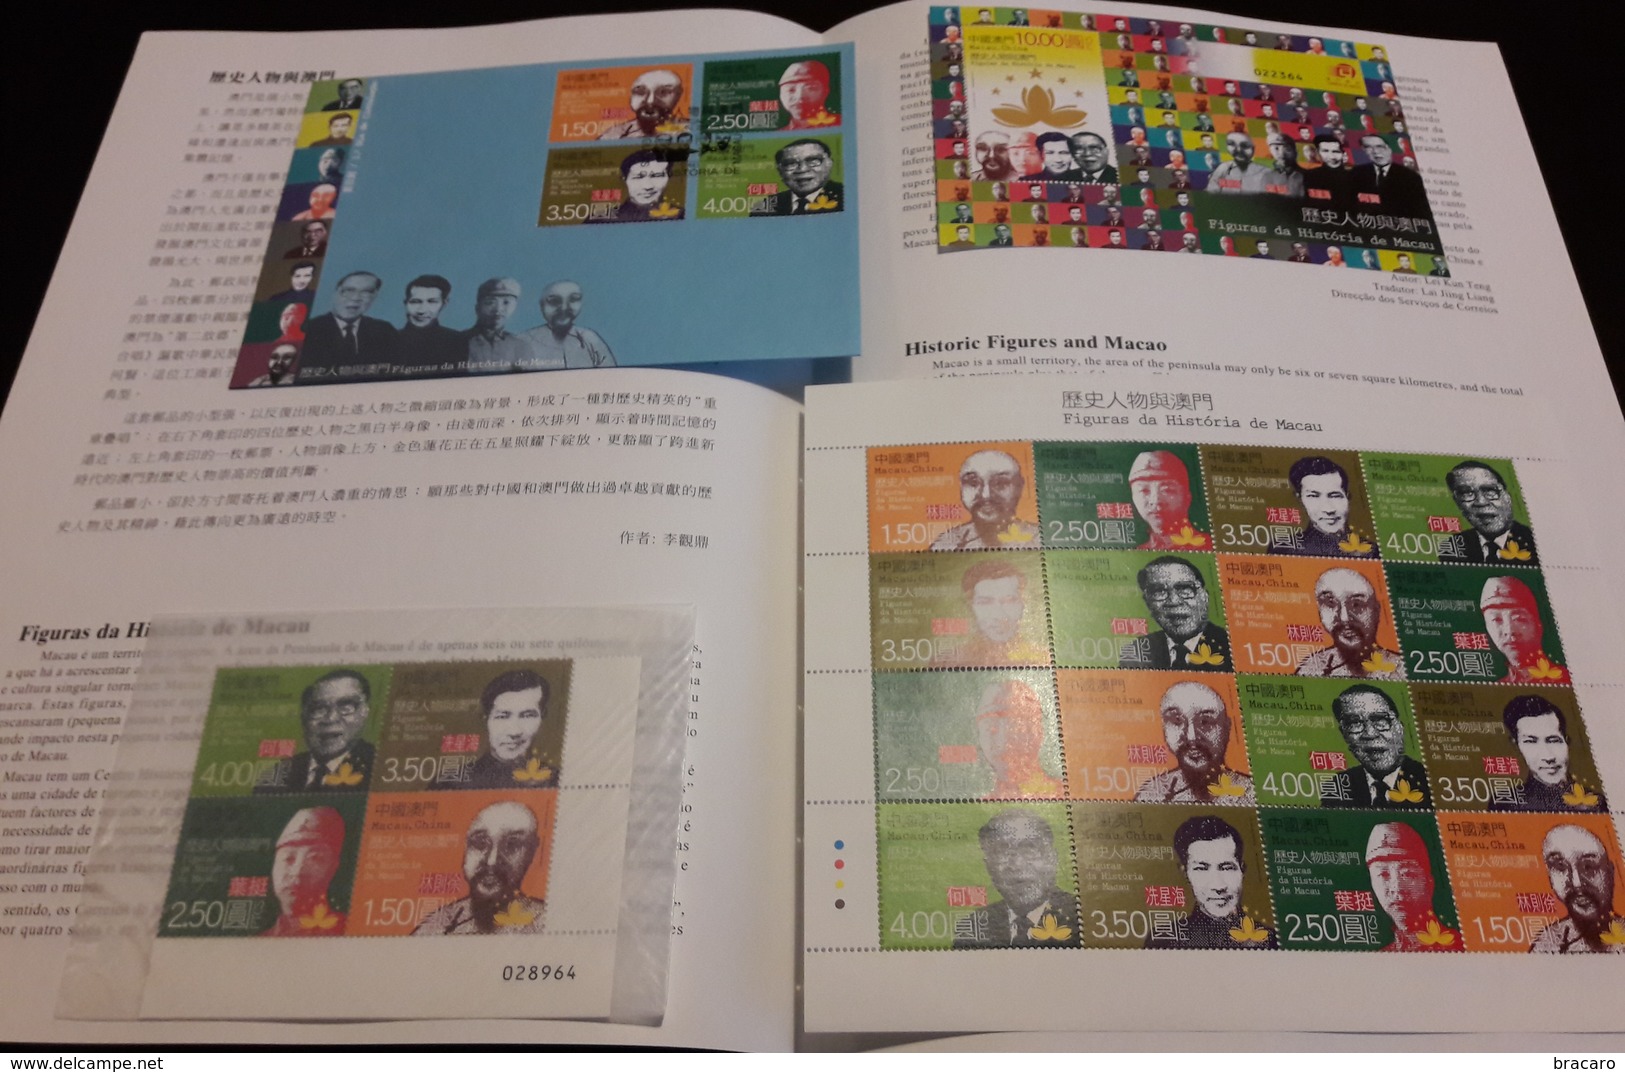 MACAU / MACAO (CHINA) - Historic Figures 2011 - Stamps (1/4 Sheet) MNH + Block MNH + Miniature Sheet MNH + FDC + Leaflet - Colecciones & Series